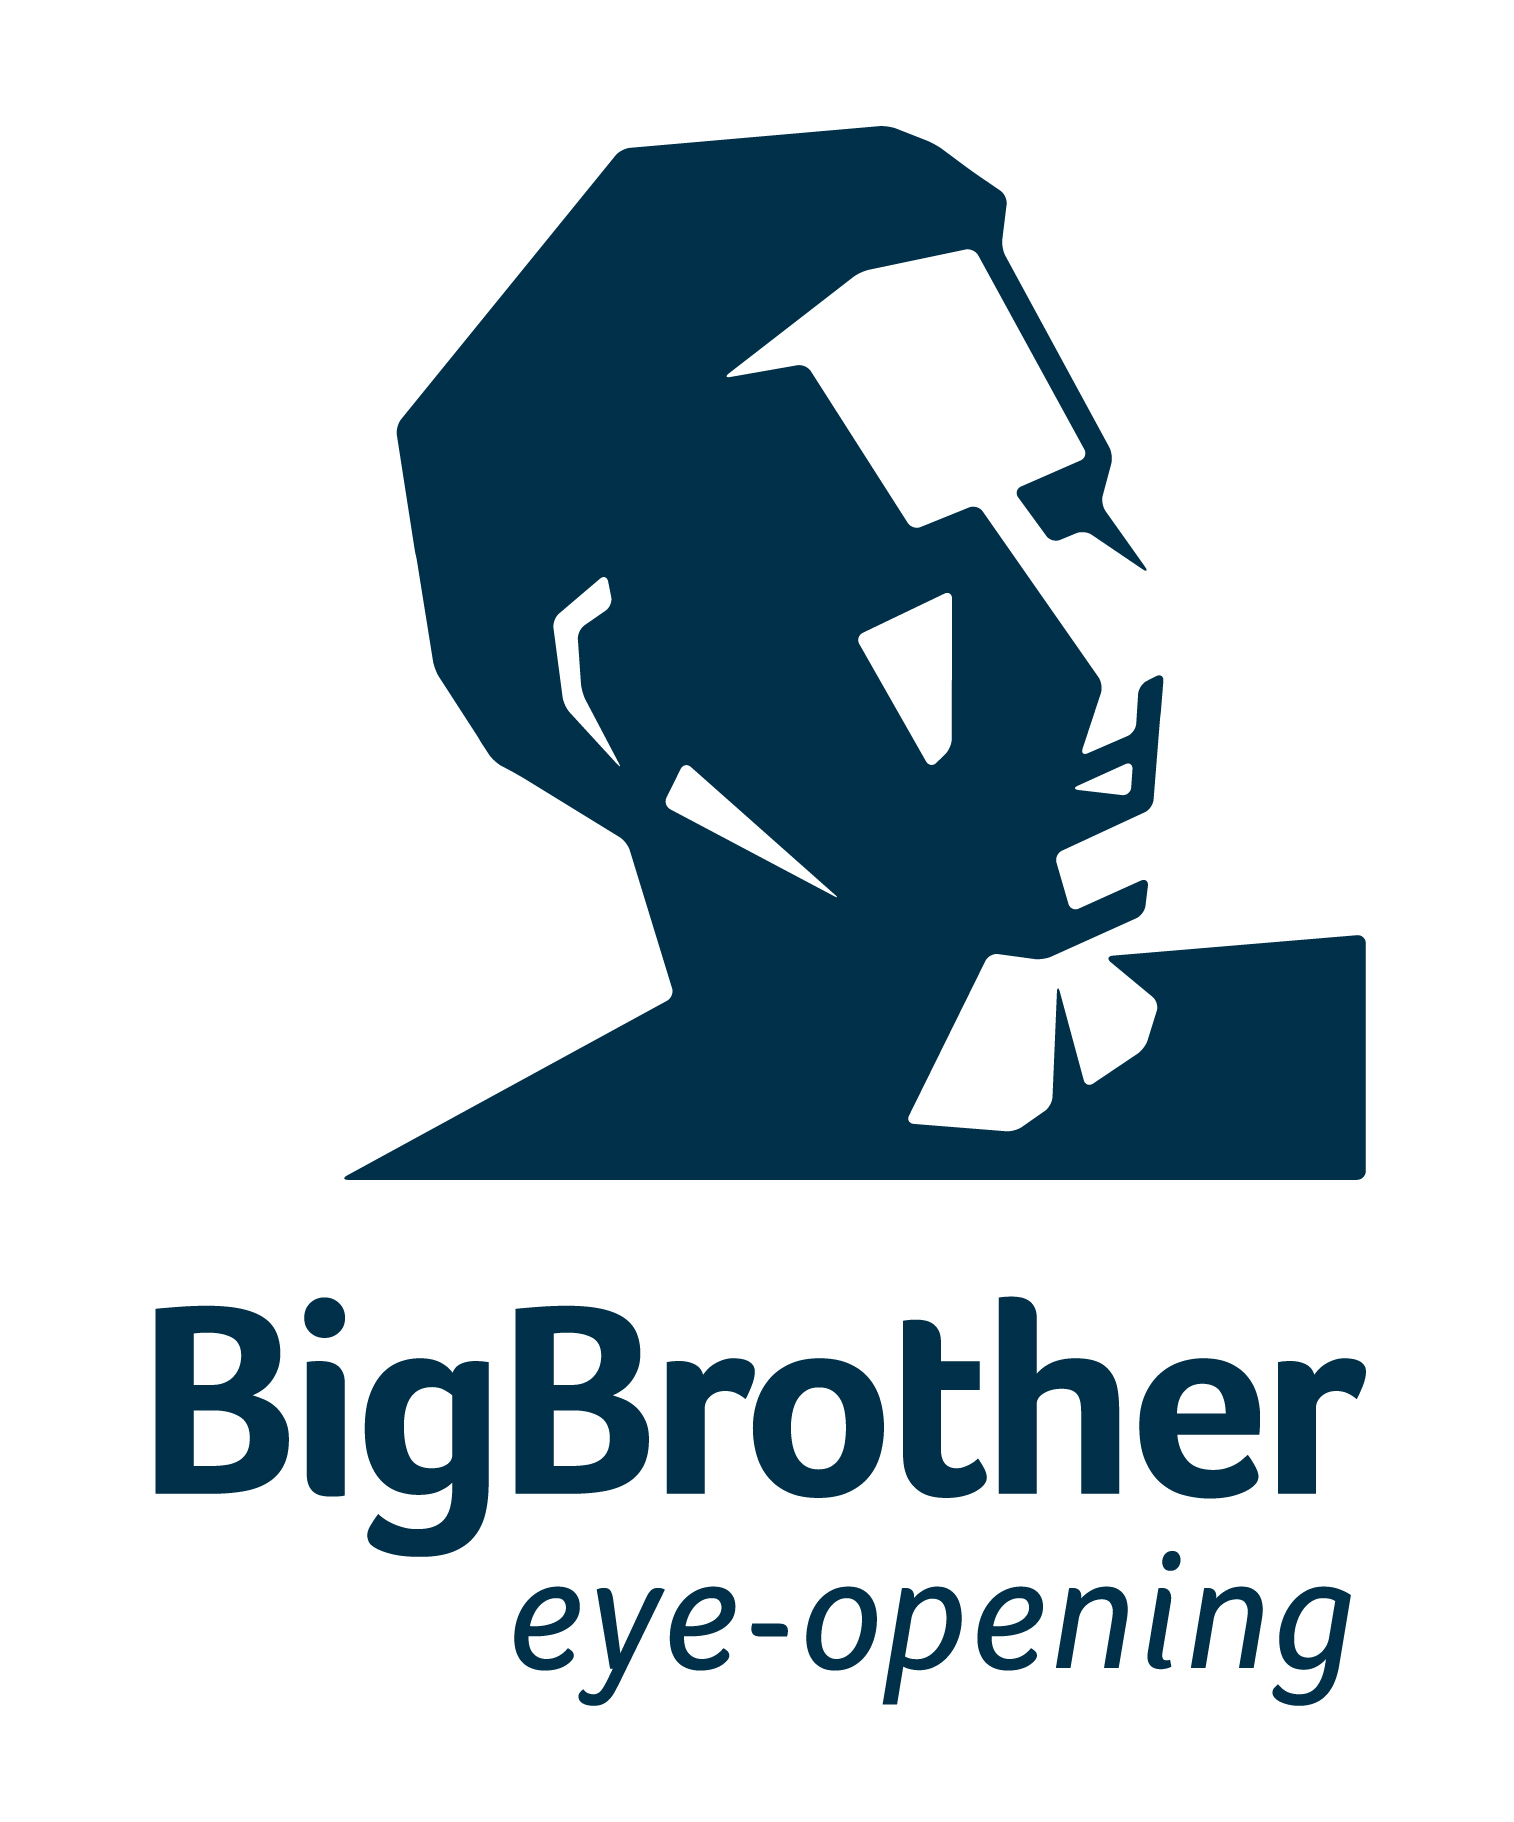 Manager Innovation & Technology, BigBrother International